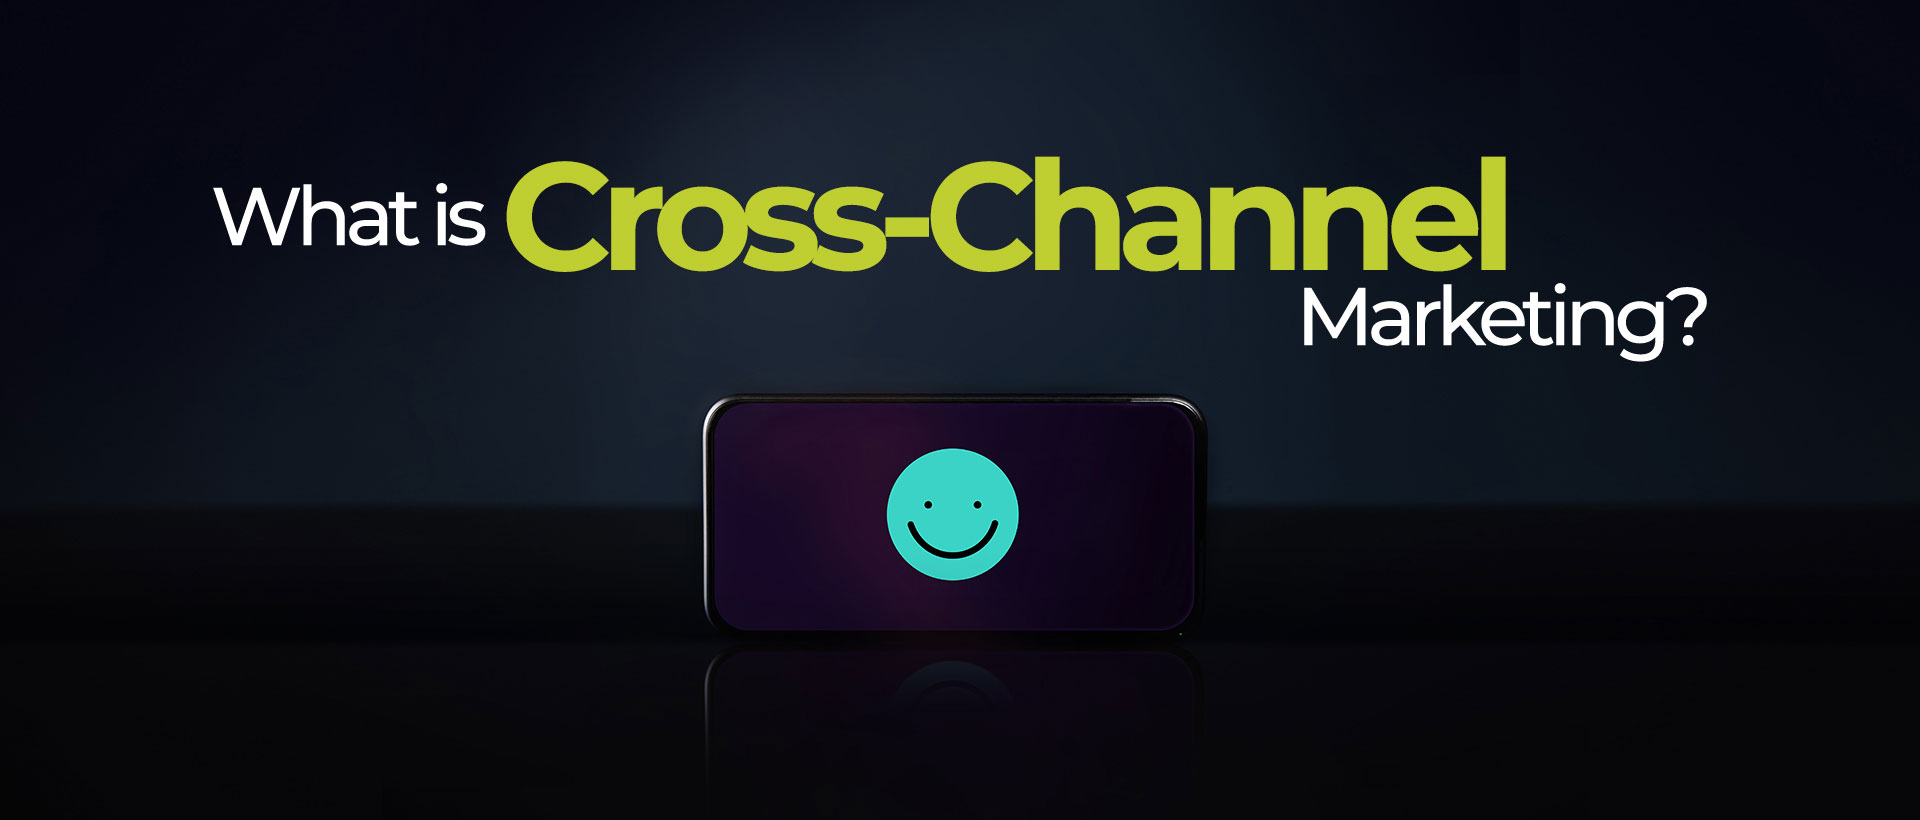 What is Cross-Channel Marketing?